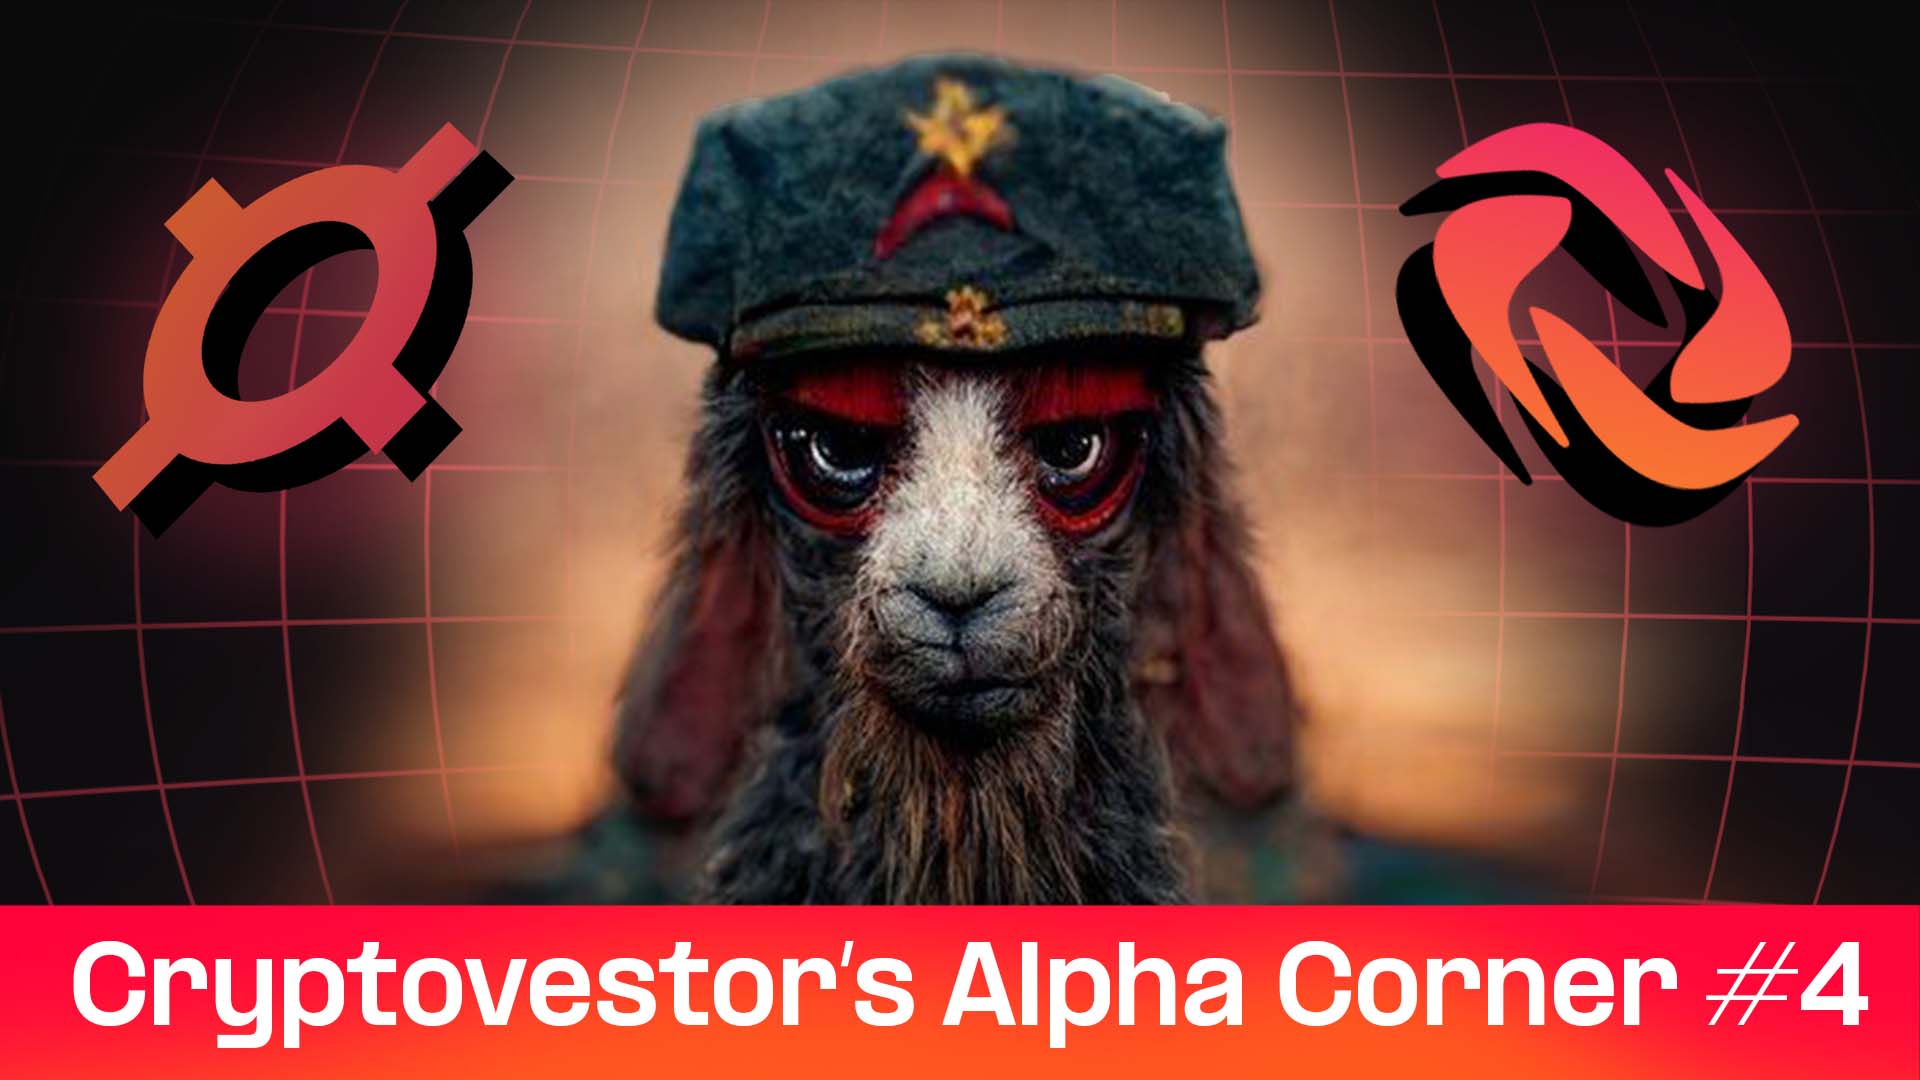 Stealth Mode - Cryptovestor’s Alpha Corner #4